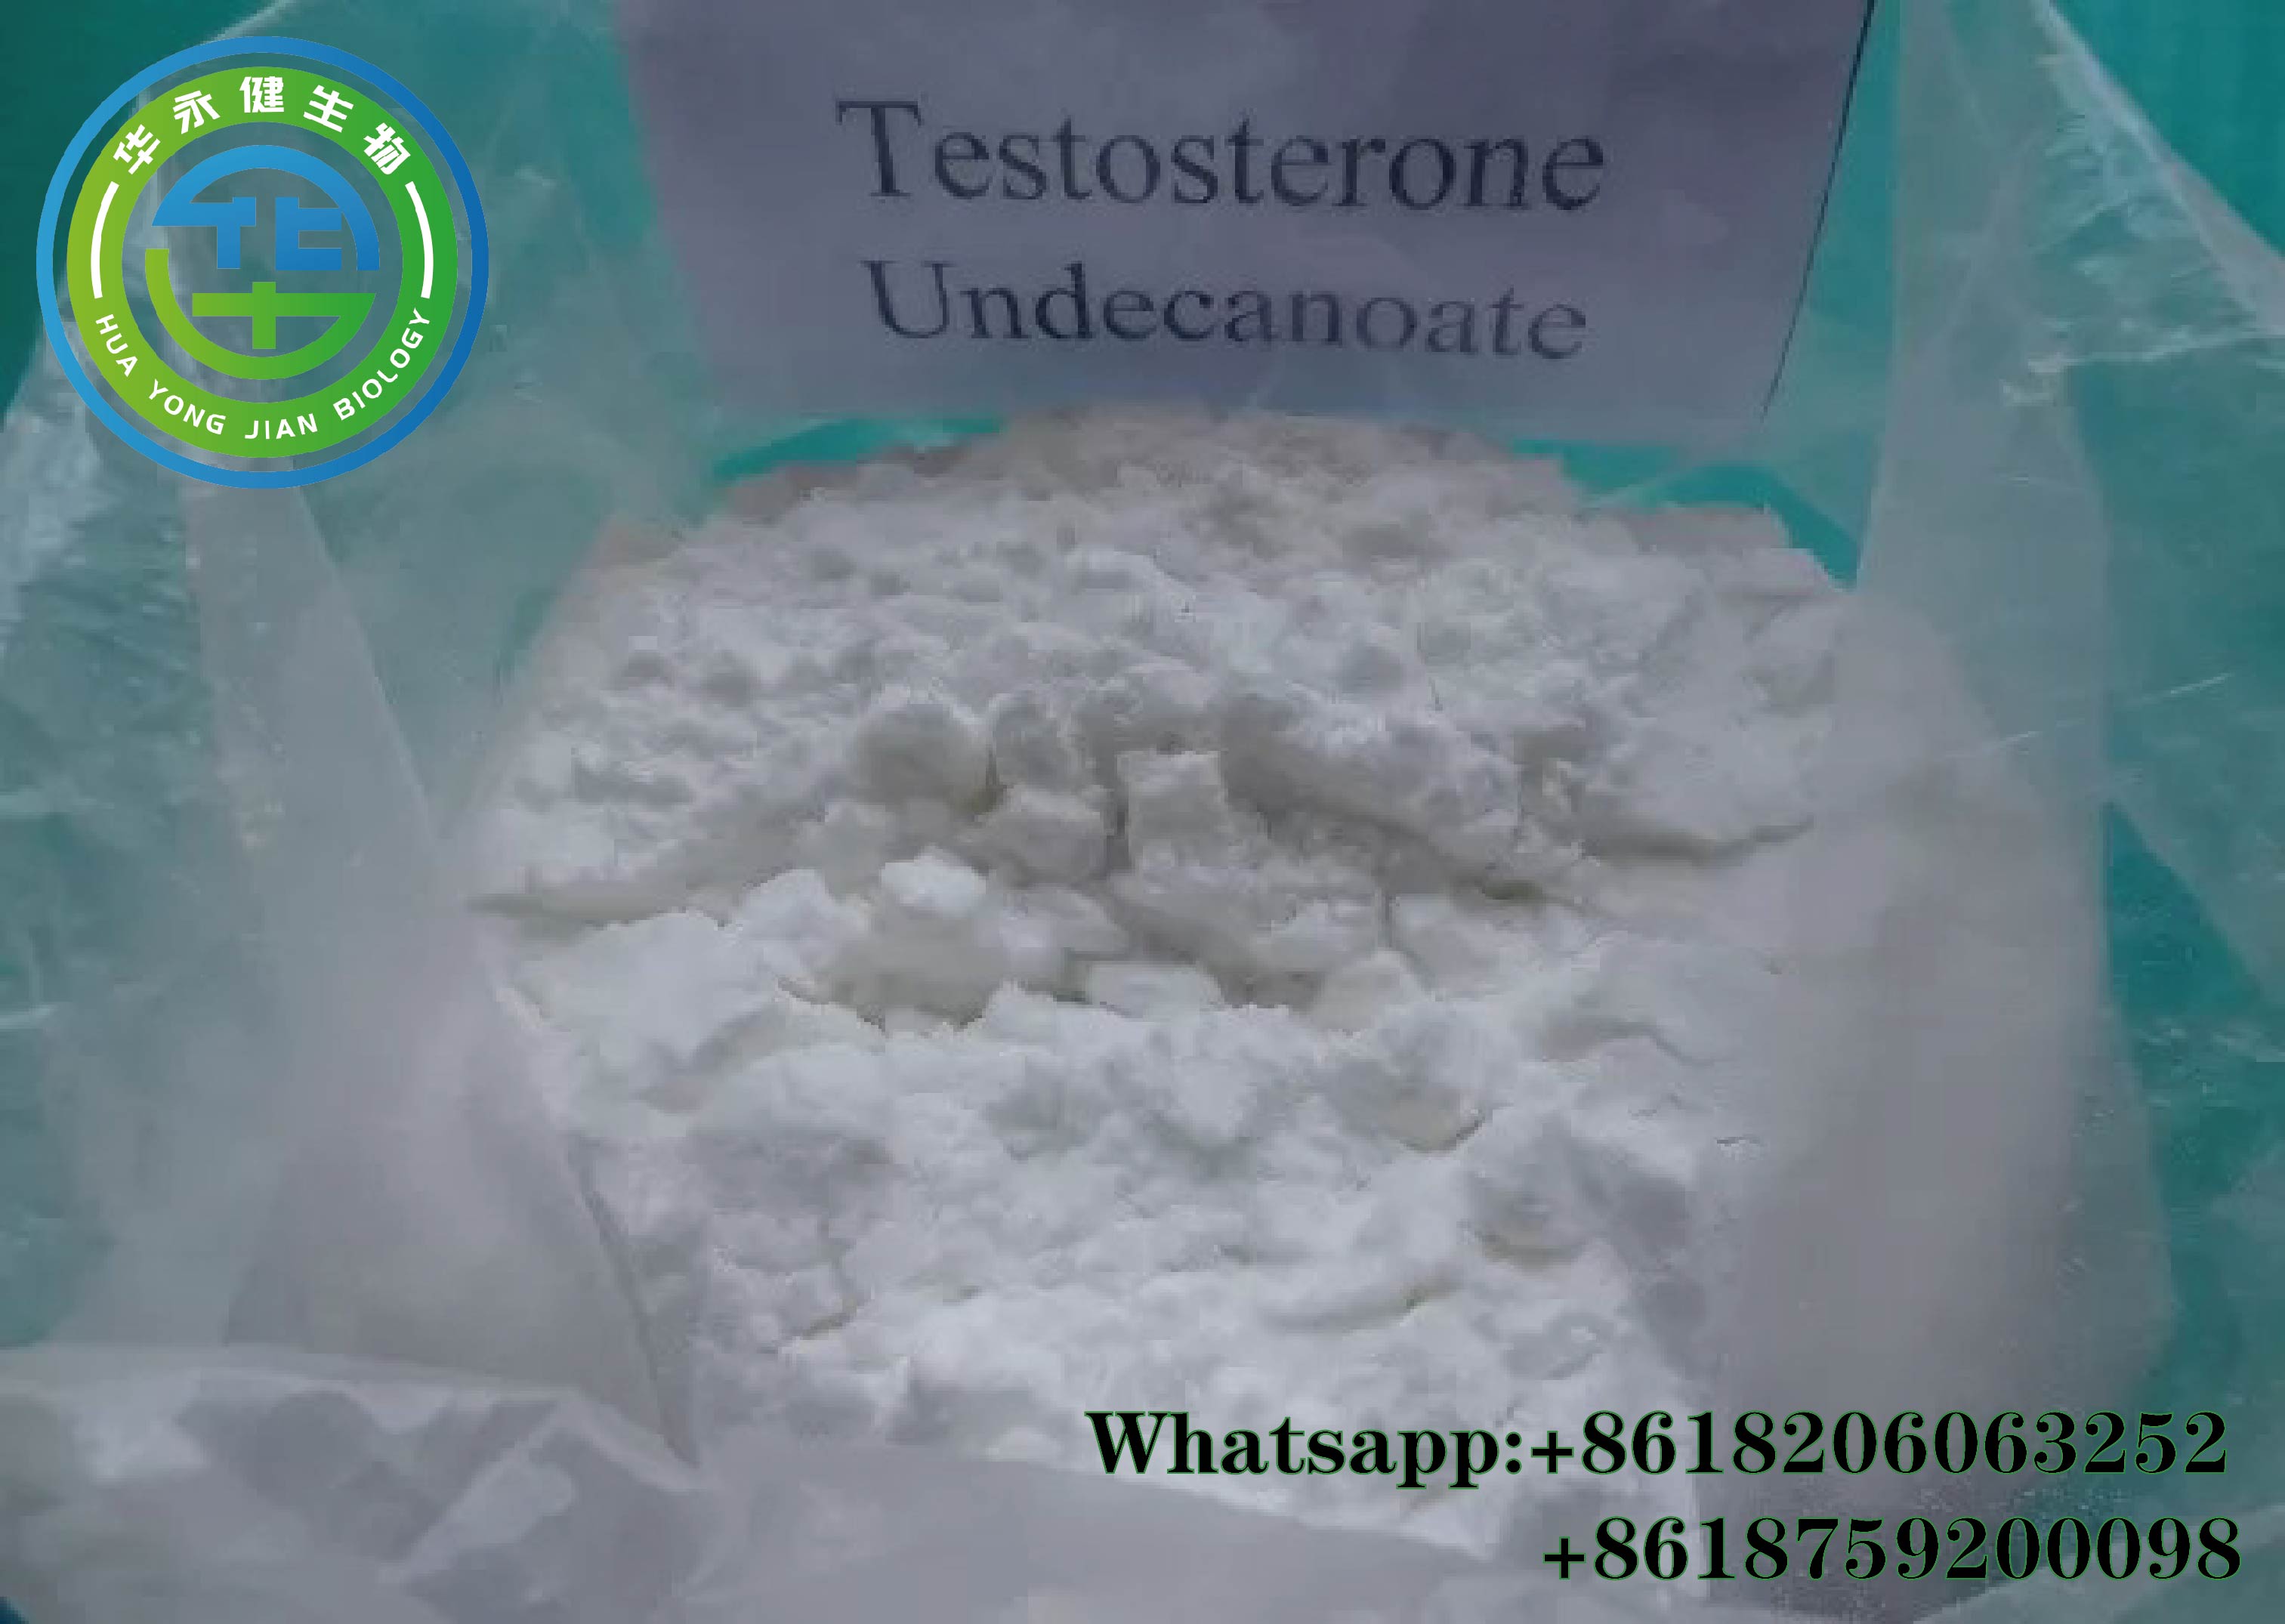 Testosterone Undecanoate5